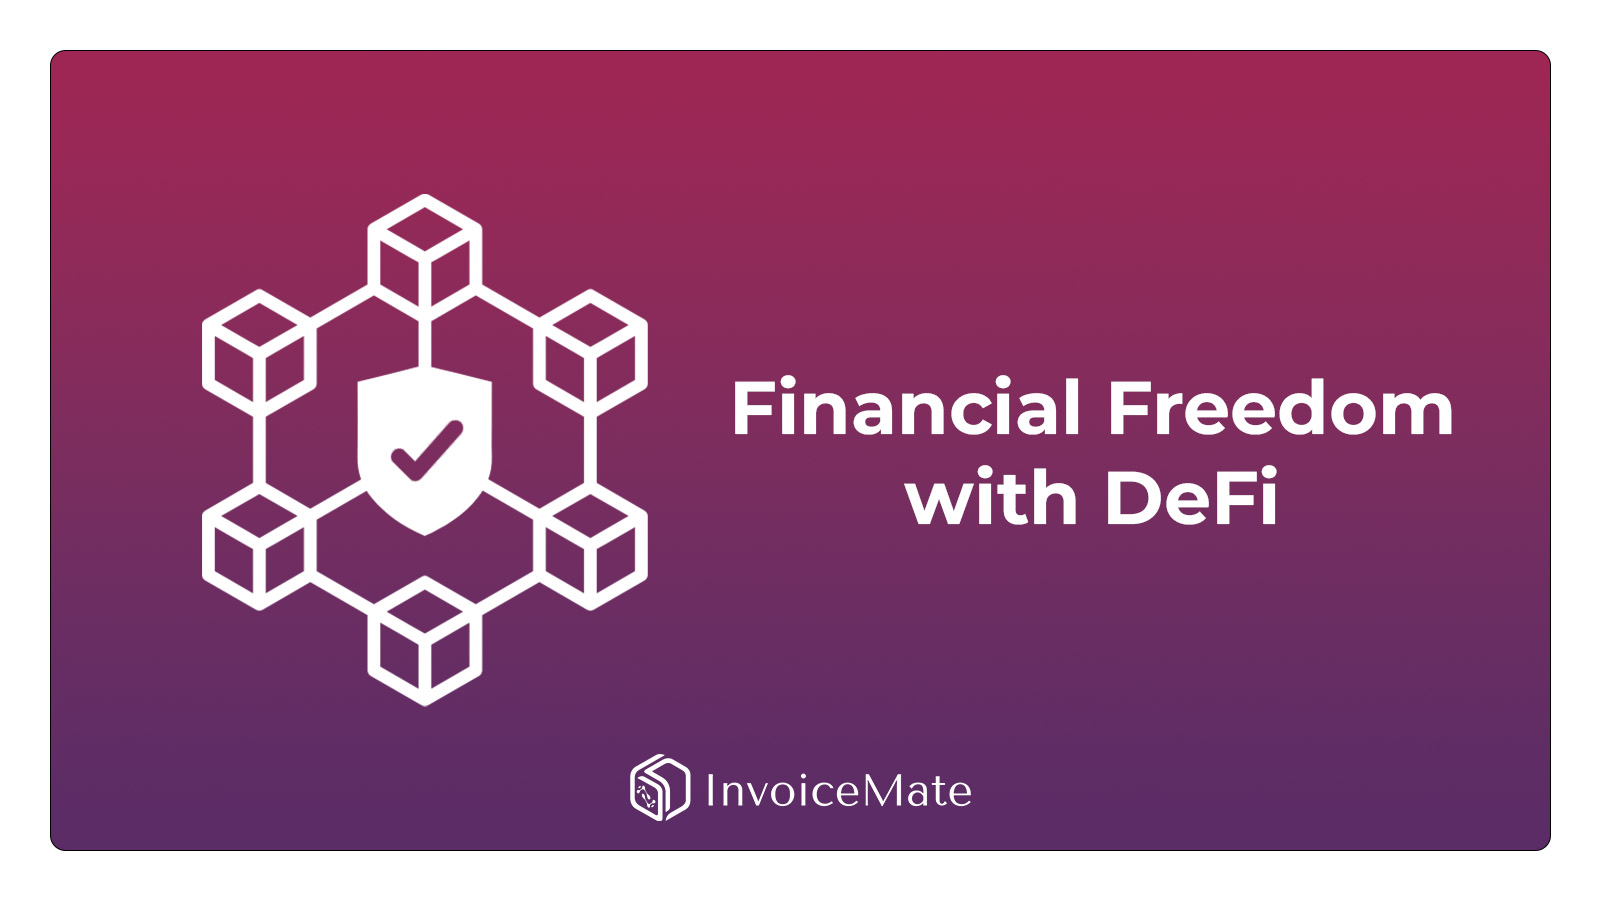 Financial Freedom with DeFi